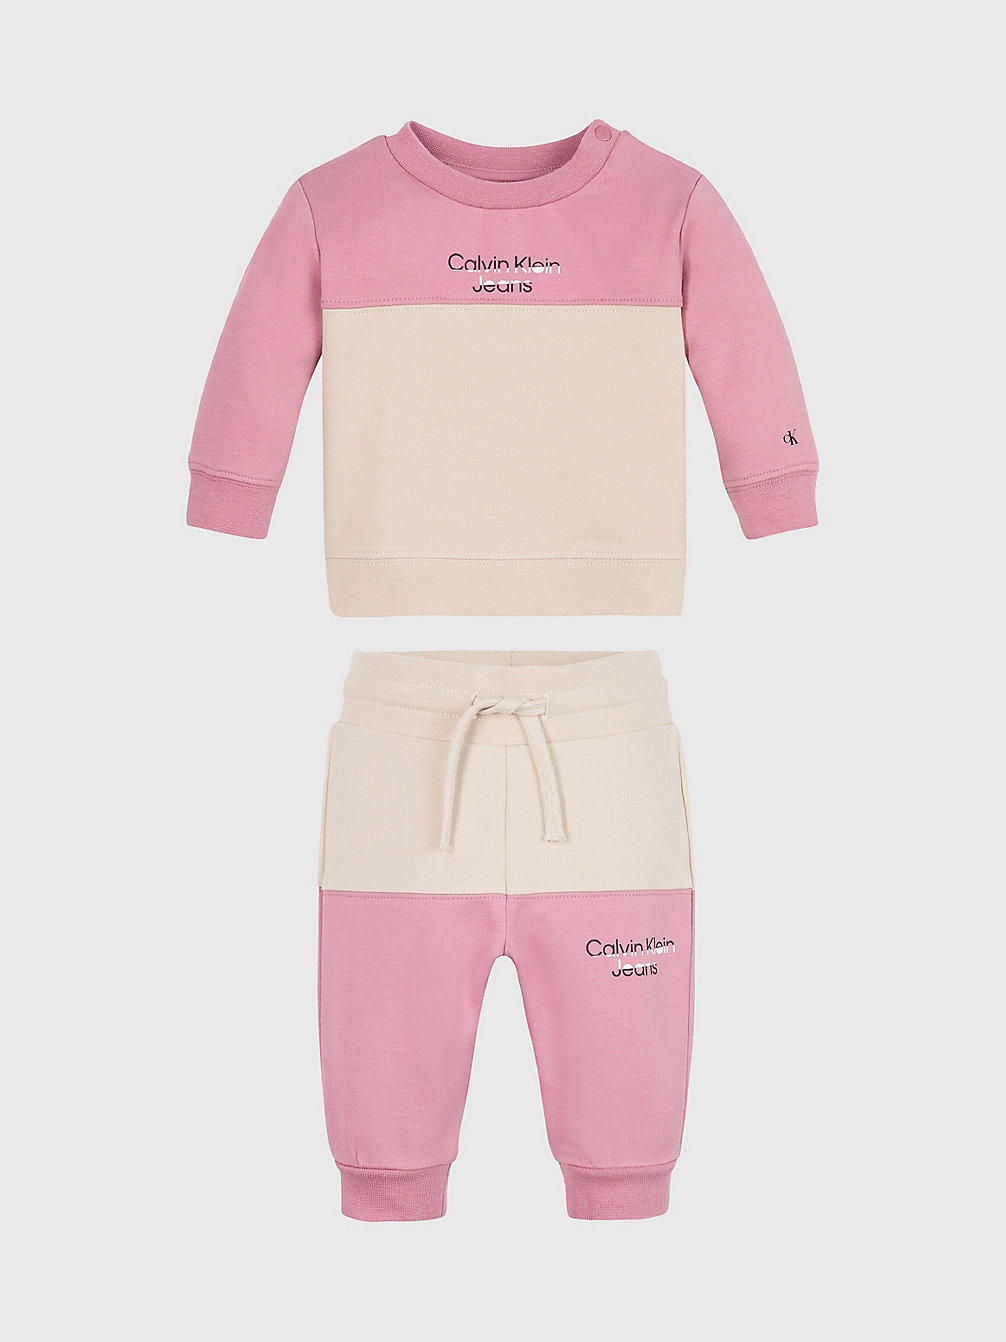 FOXGLOVE Newborn-Trainingspak Met Colourblock undefined newborn Calvin Klein